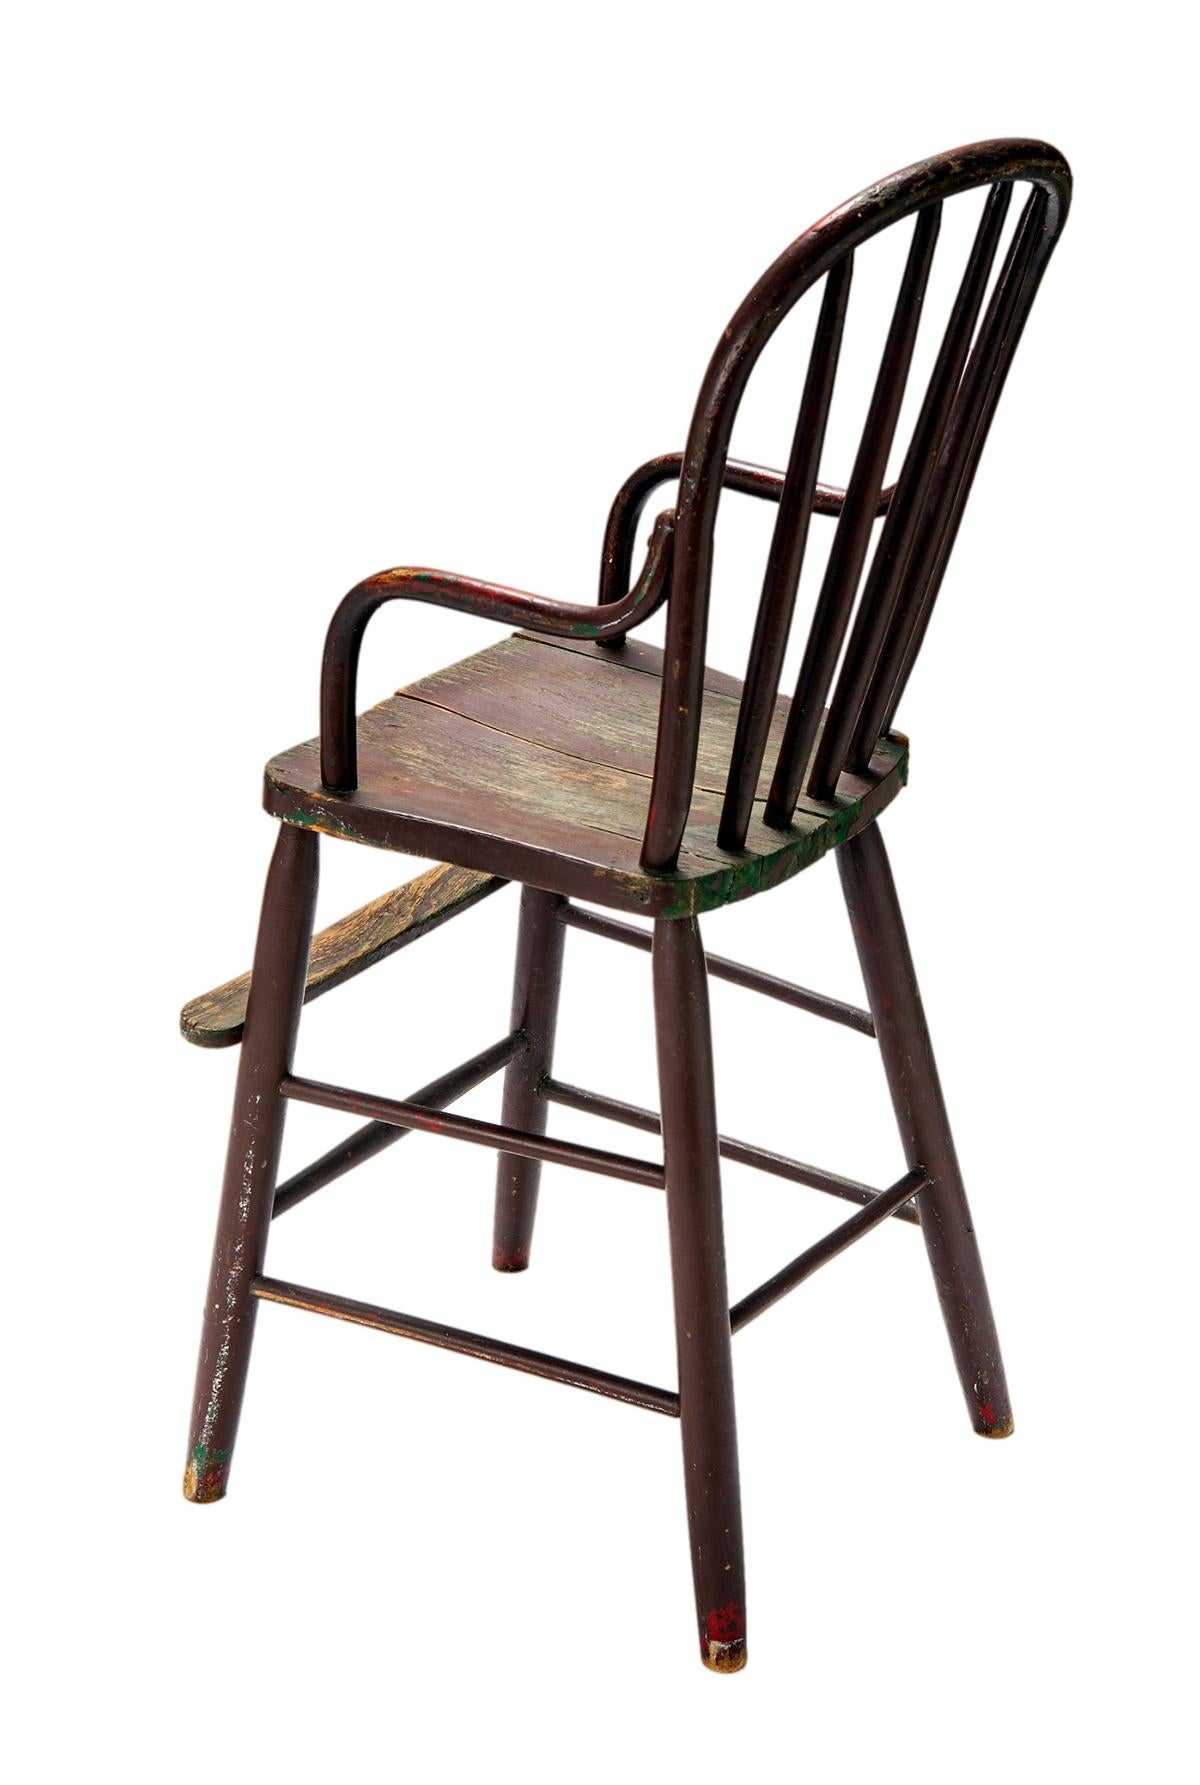 19th Century Primitive Antique Bentwood Child's High Chair